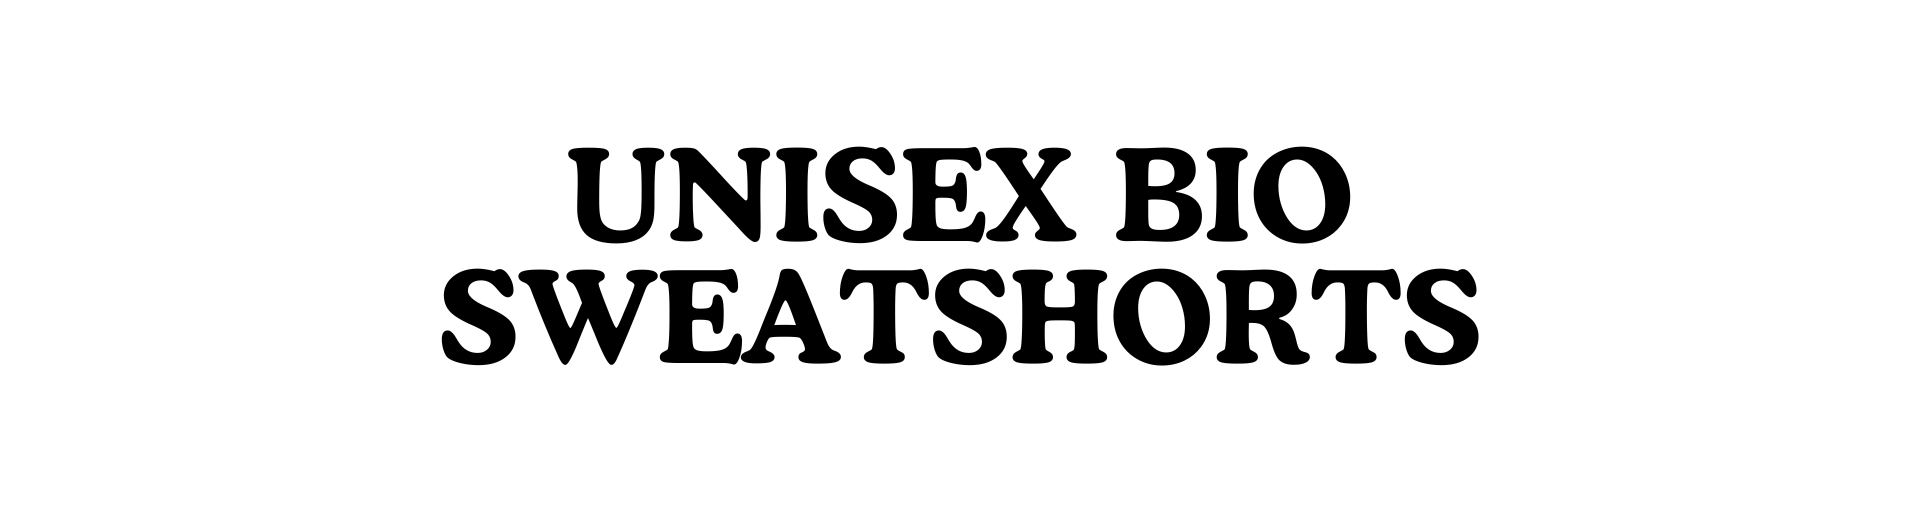 UNISEX BIO SWEATSHORTS